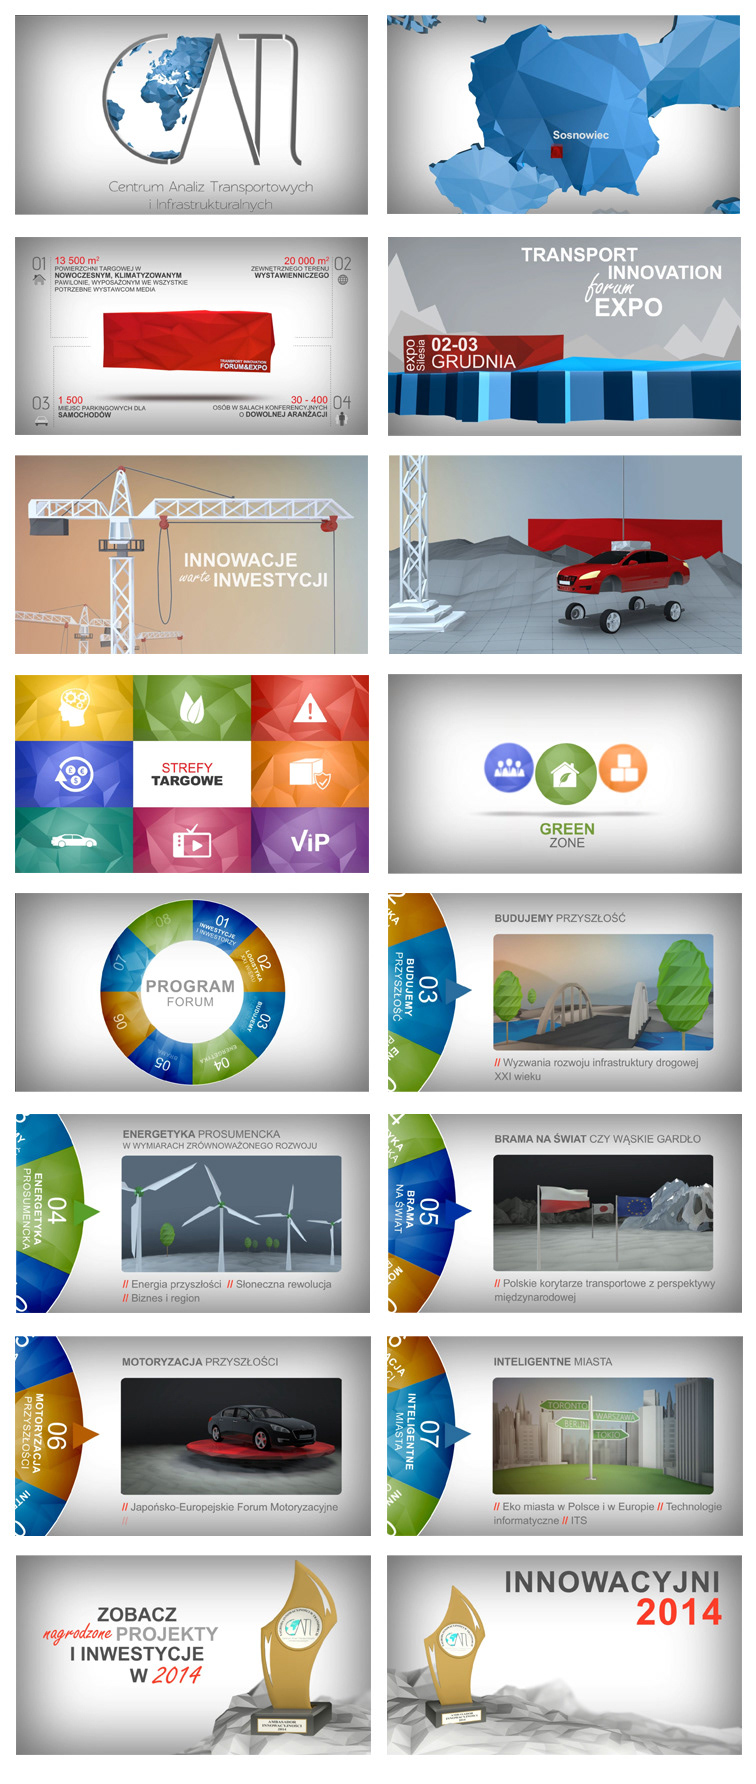 Transport innovation storyboard presentation